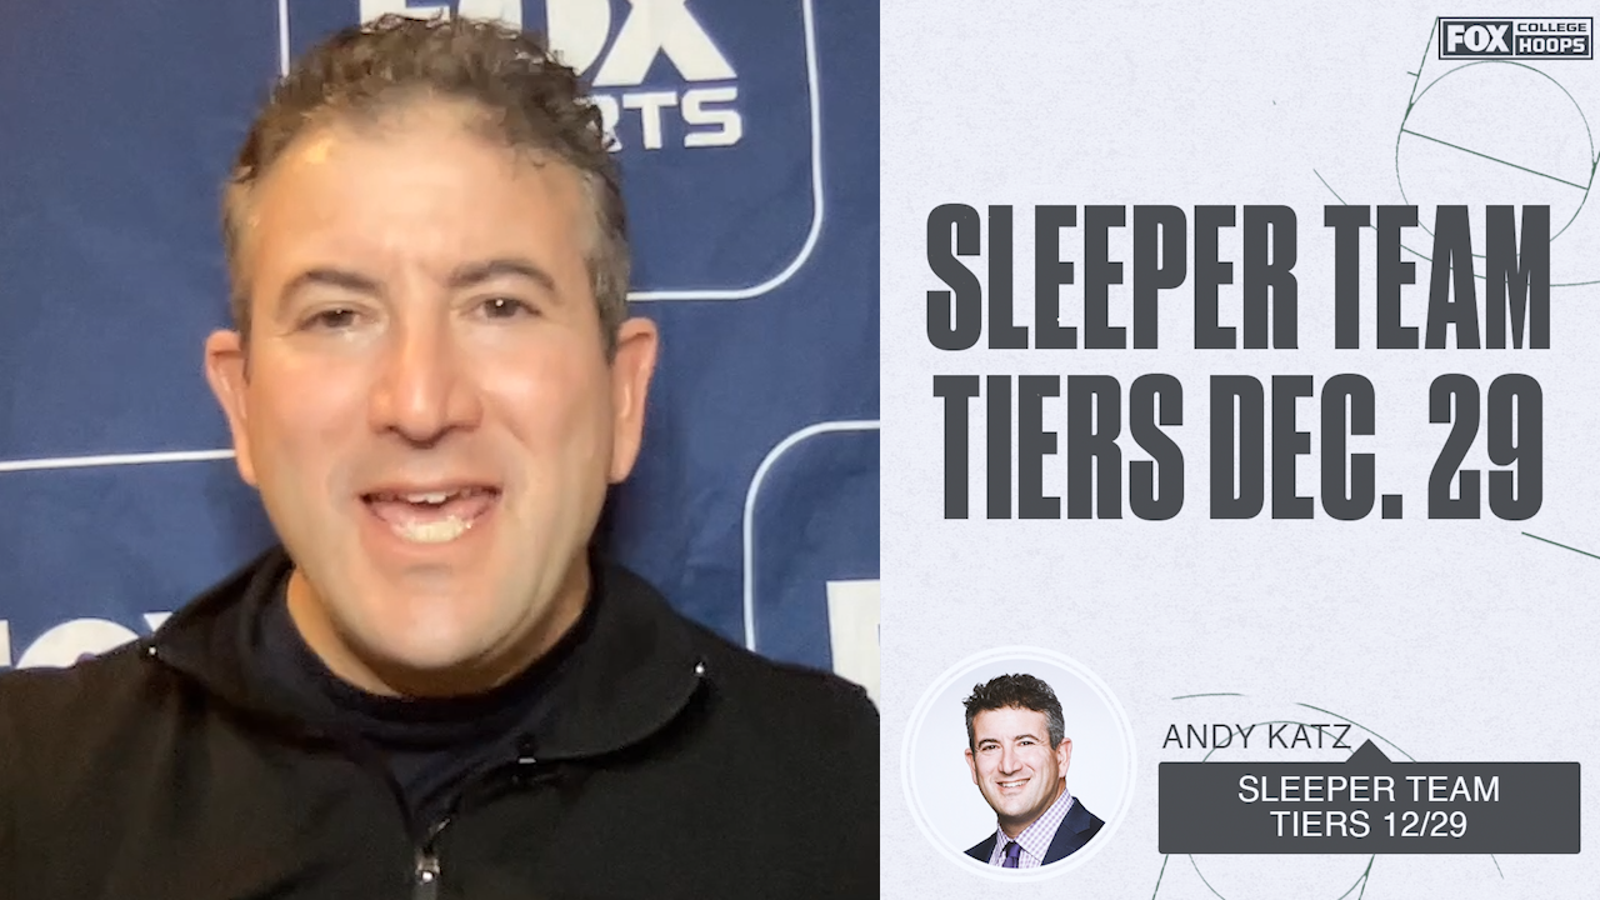 Andy Katz Tiers: The Best Sleeping Gear